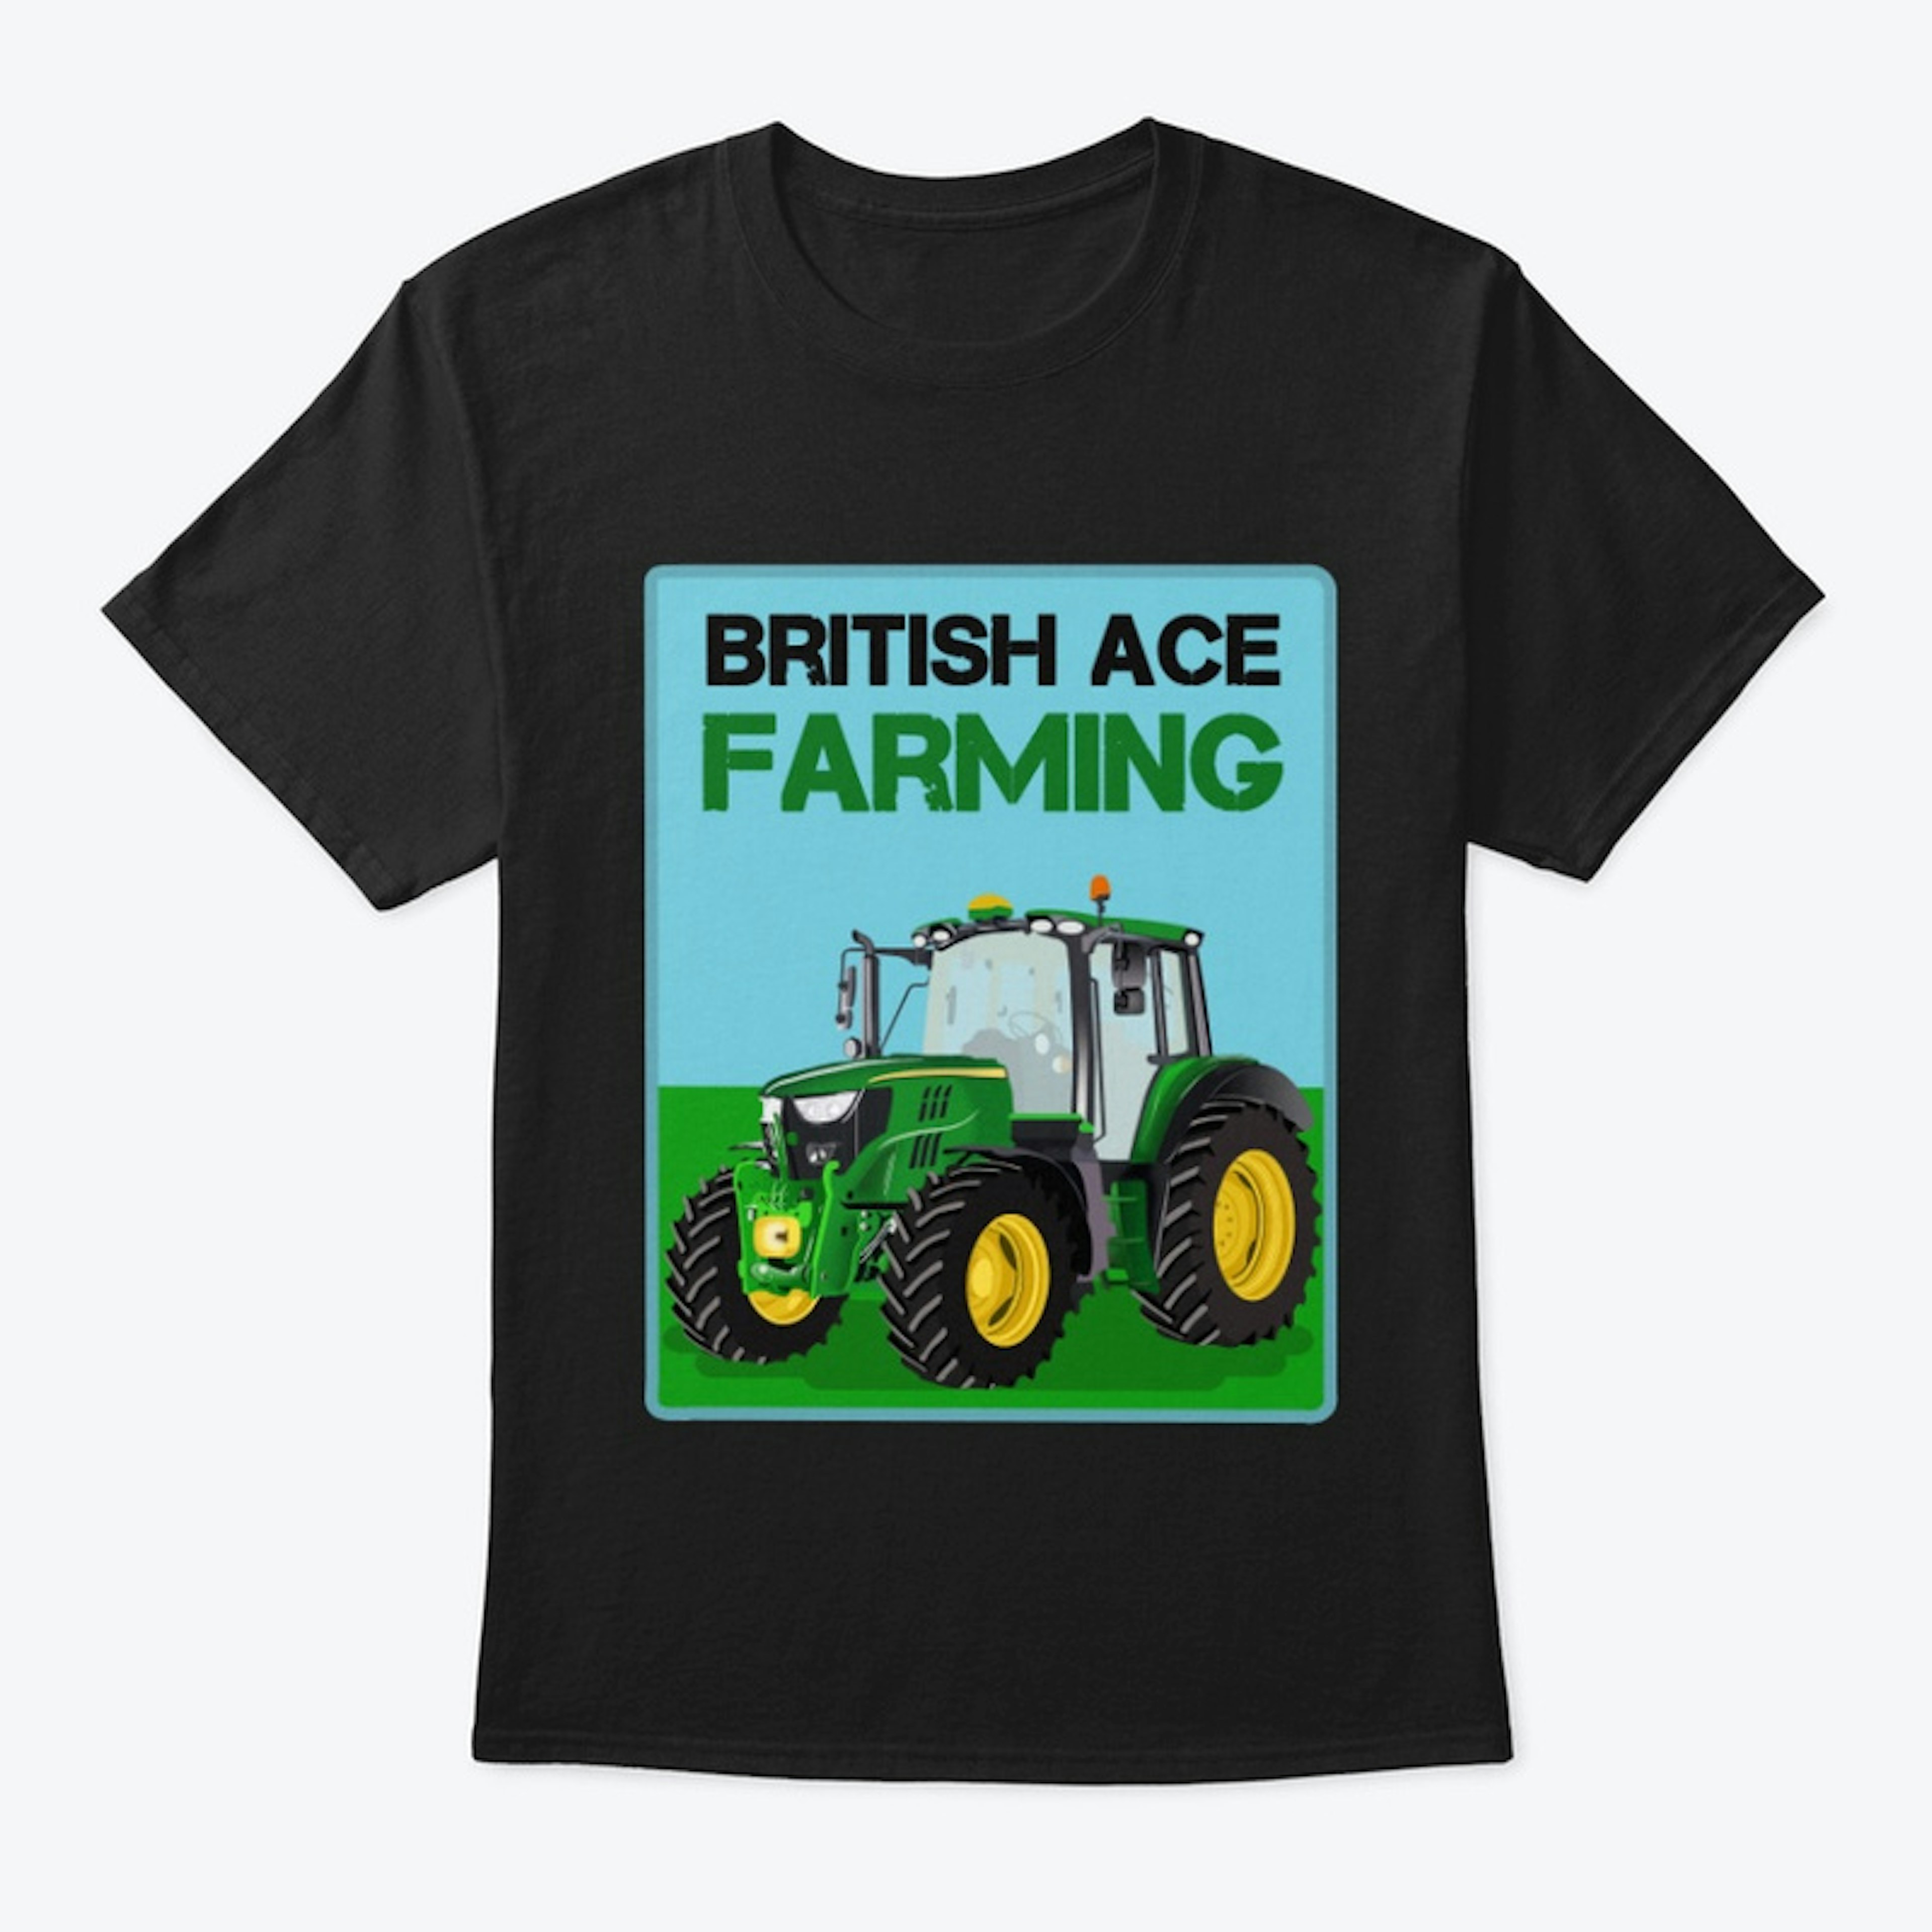 British Ace Farming Top